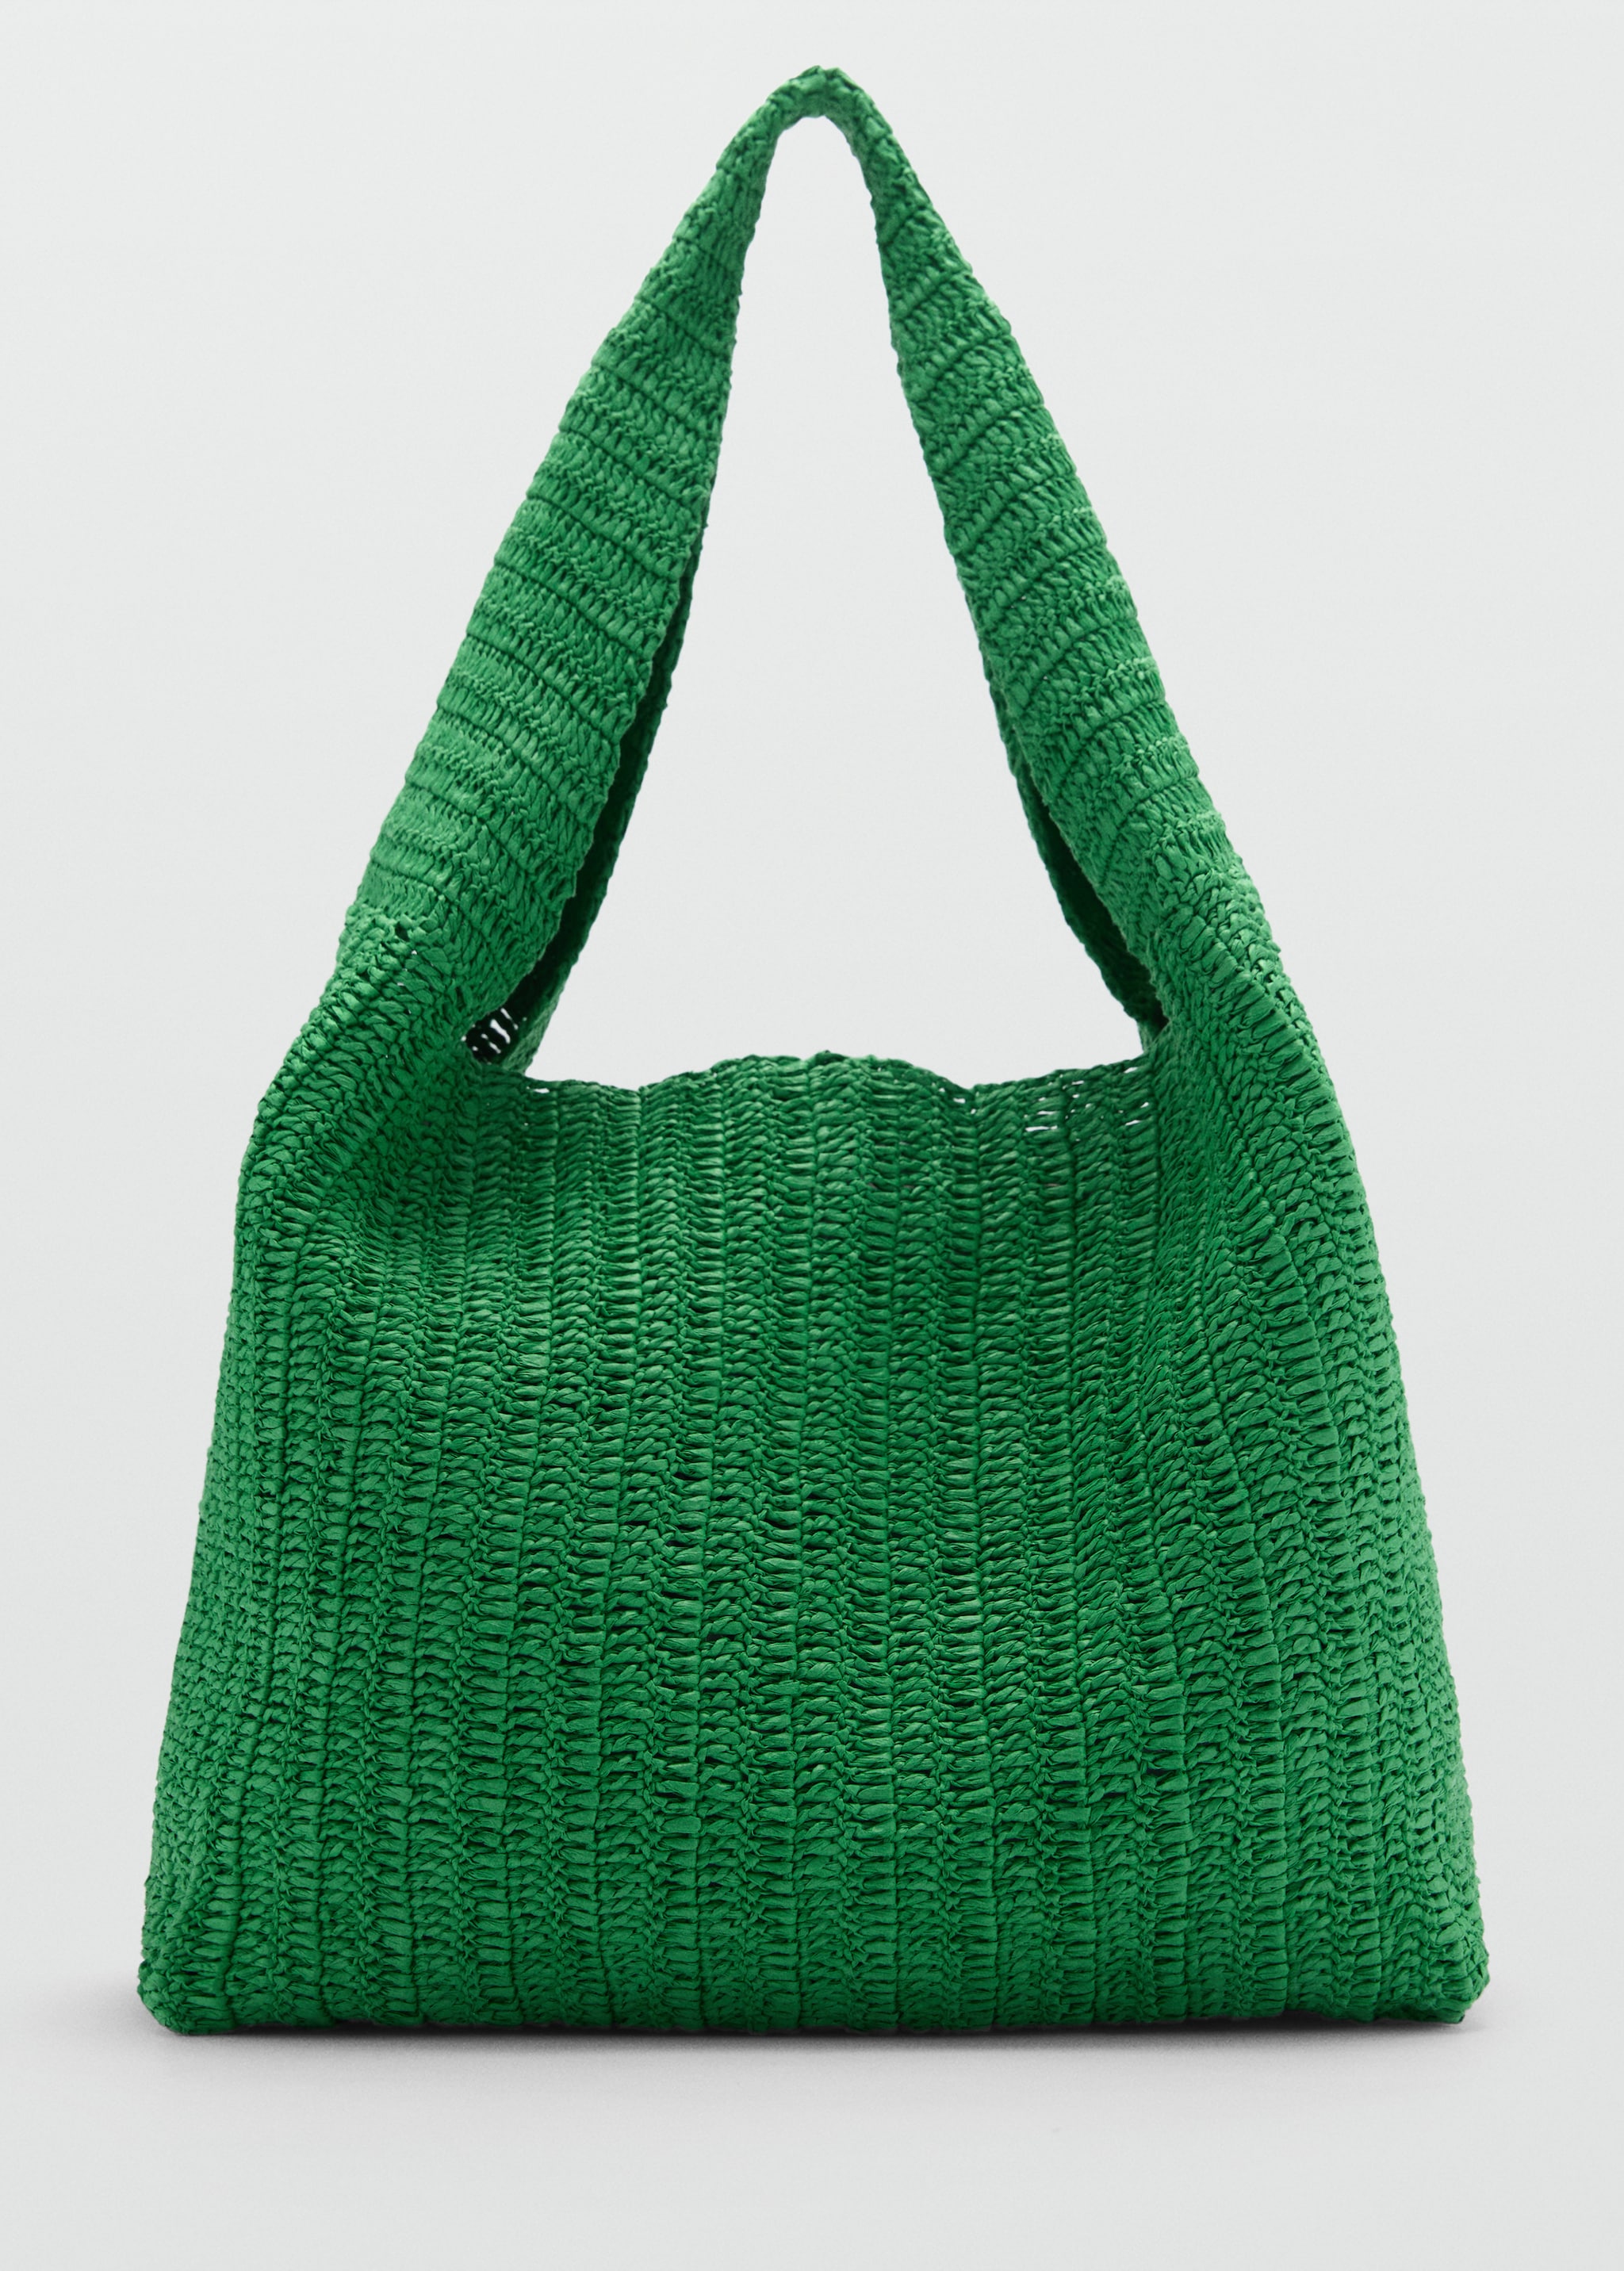 Natural fibre shopper bag - Article without model